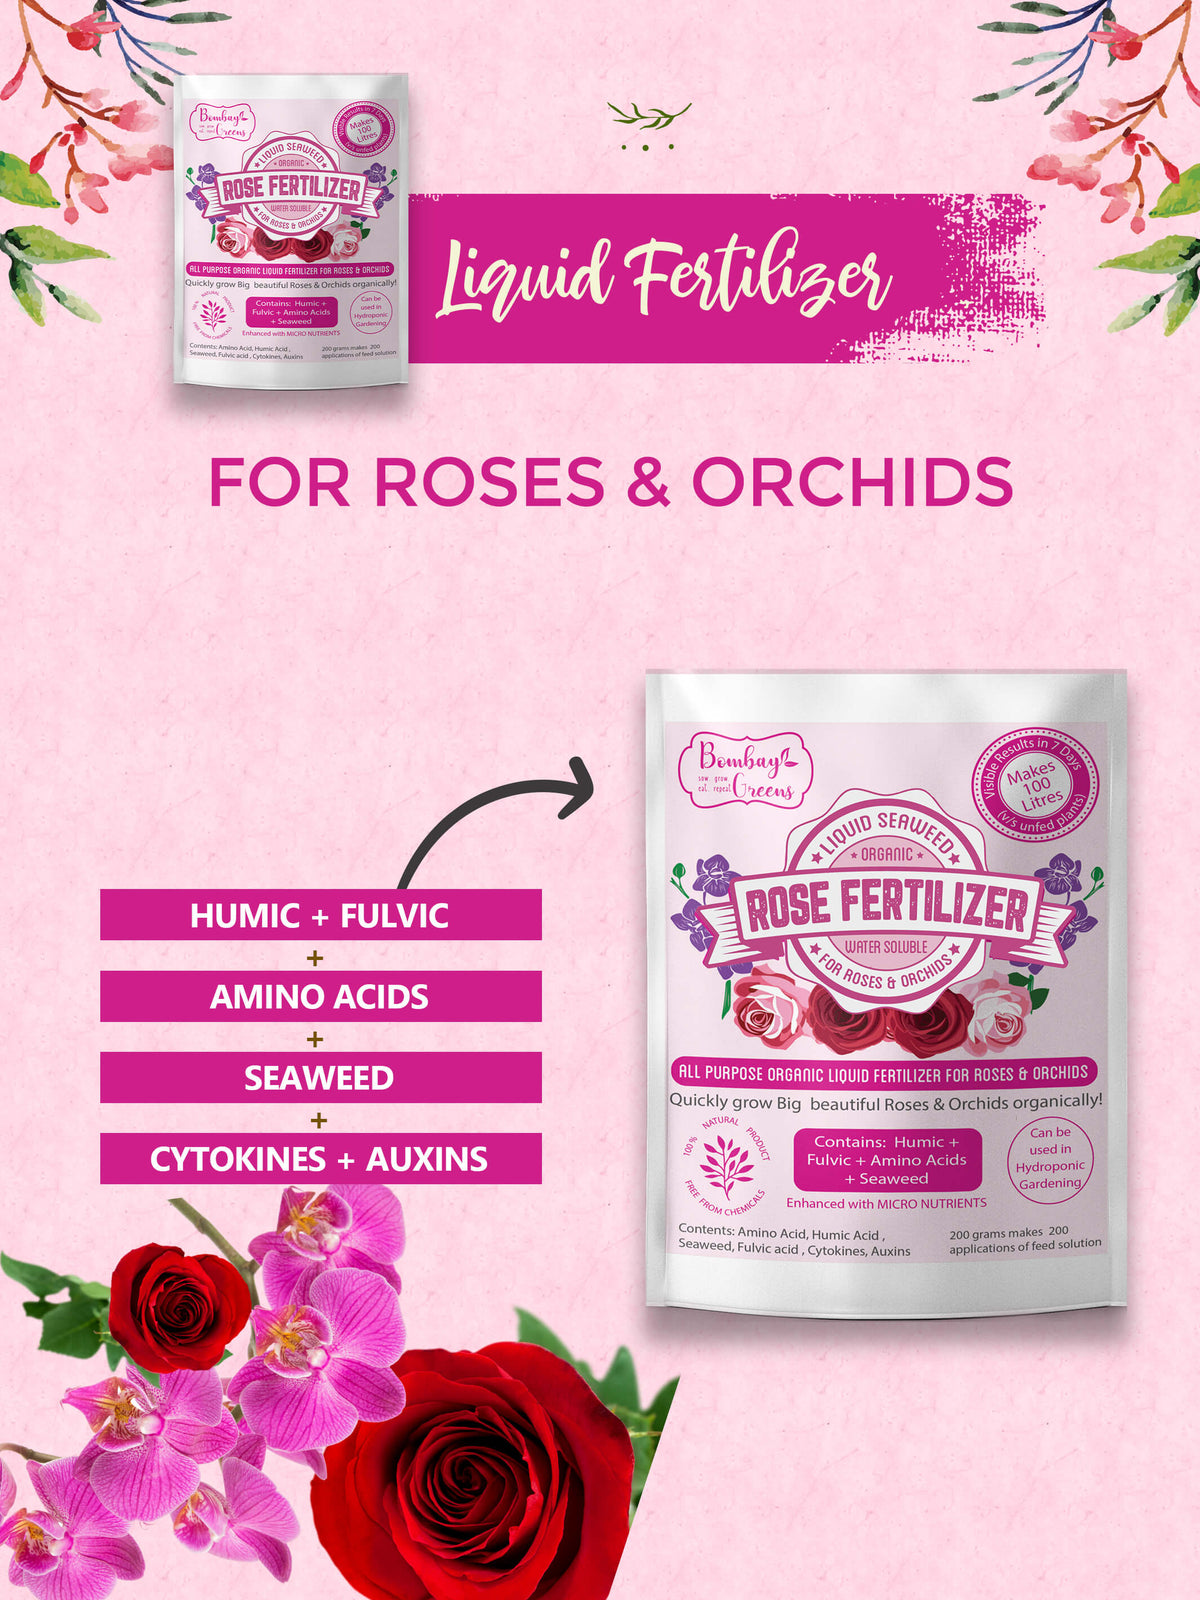 Liquid Organic Fertilizer Combo - Roses & Vegetables